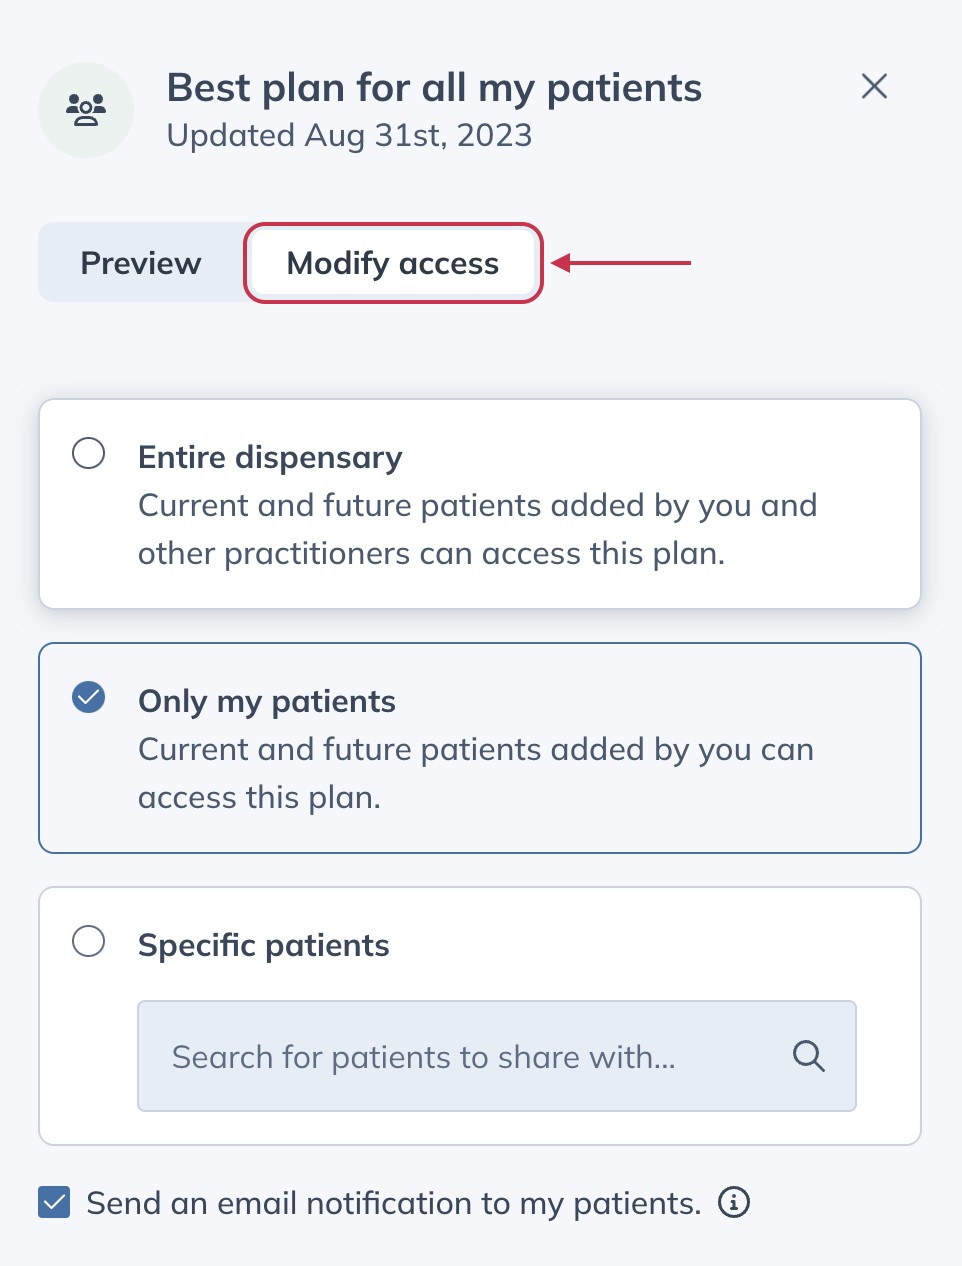 Modify access tab